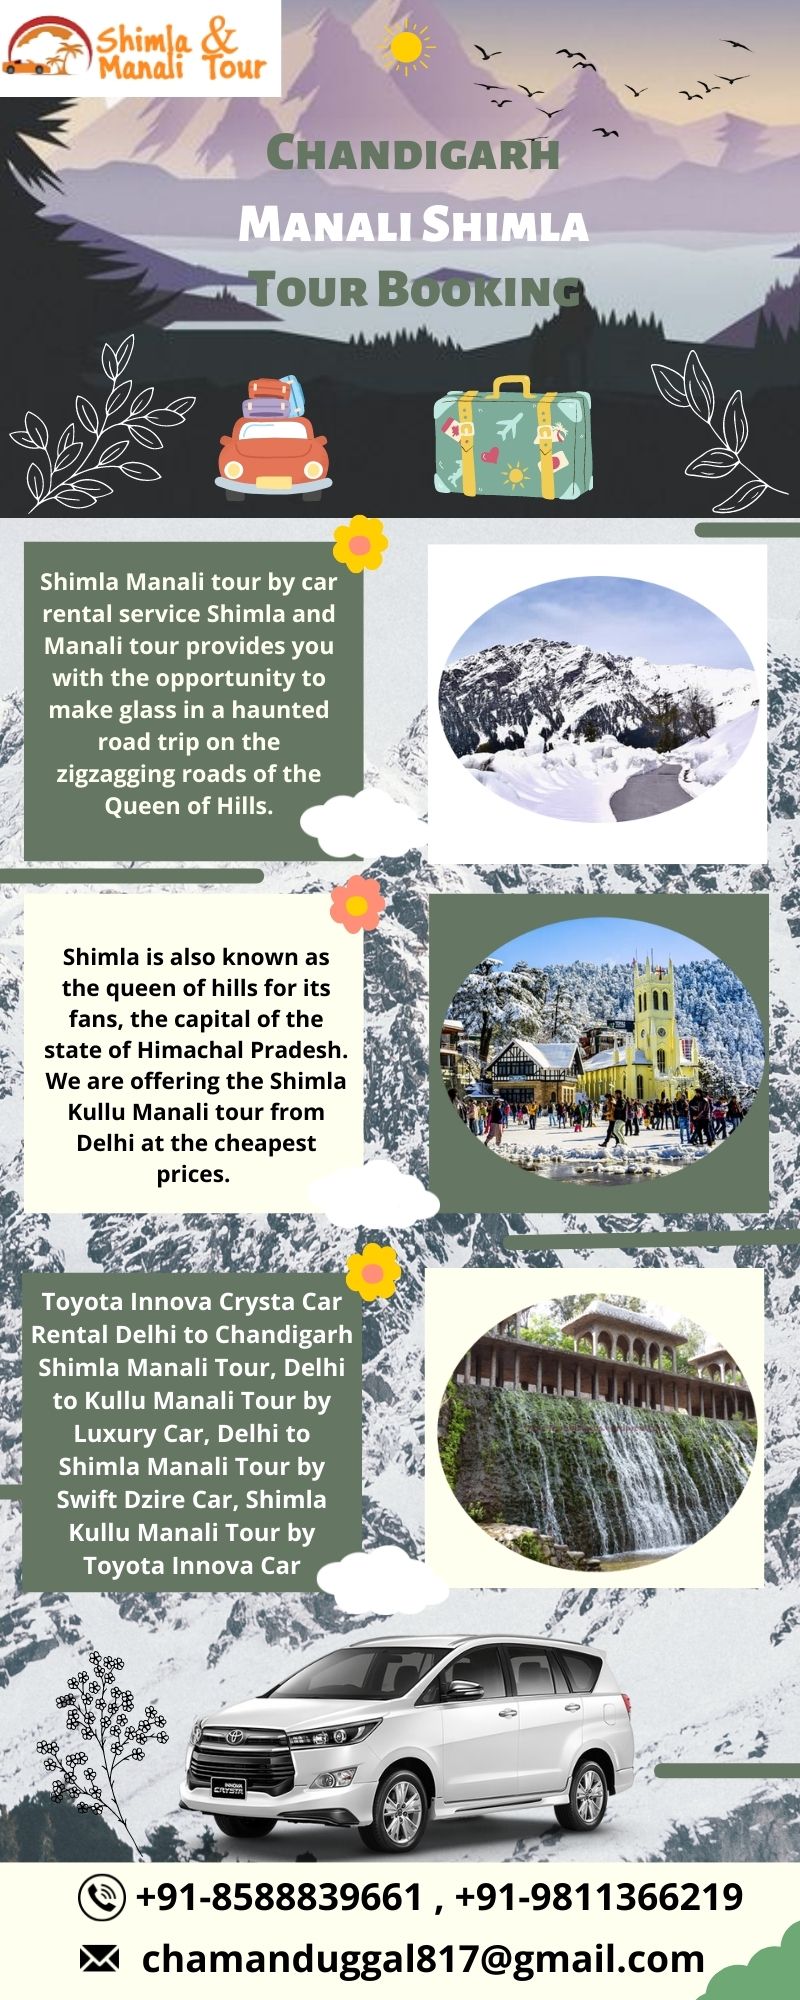 Chandigarh Shimla Manali Tour Booking-7960739e